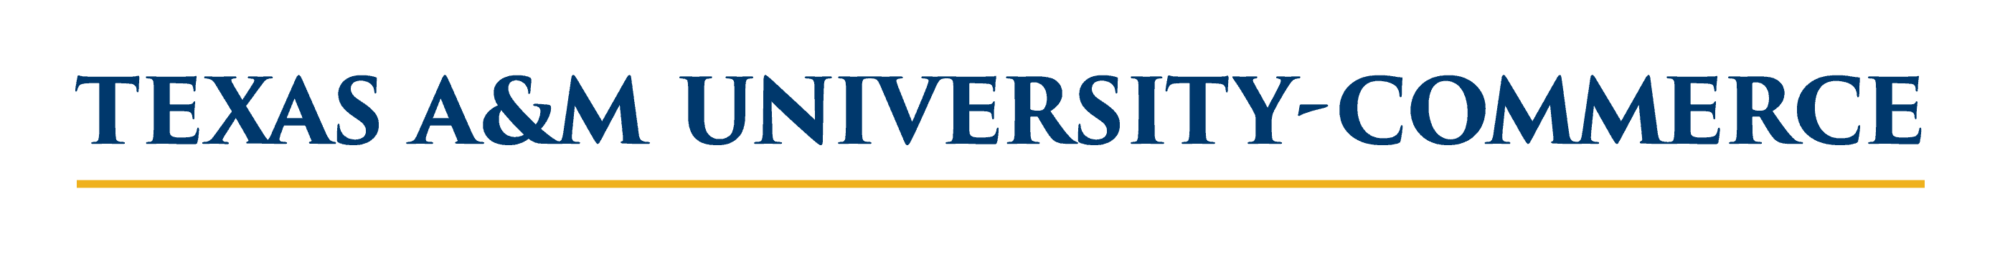 University logo with one line full name of the university on light background.